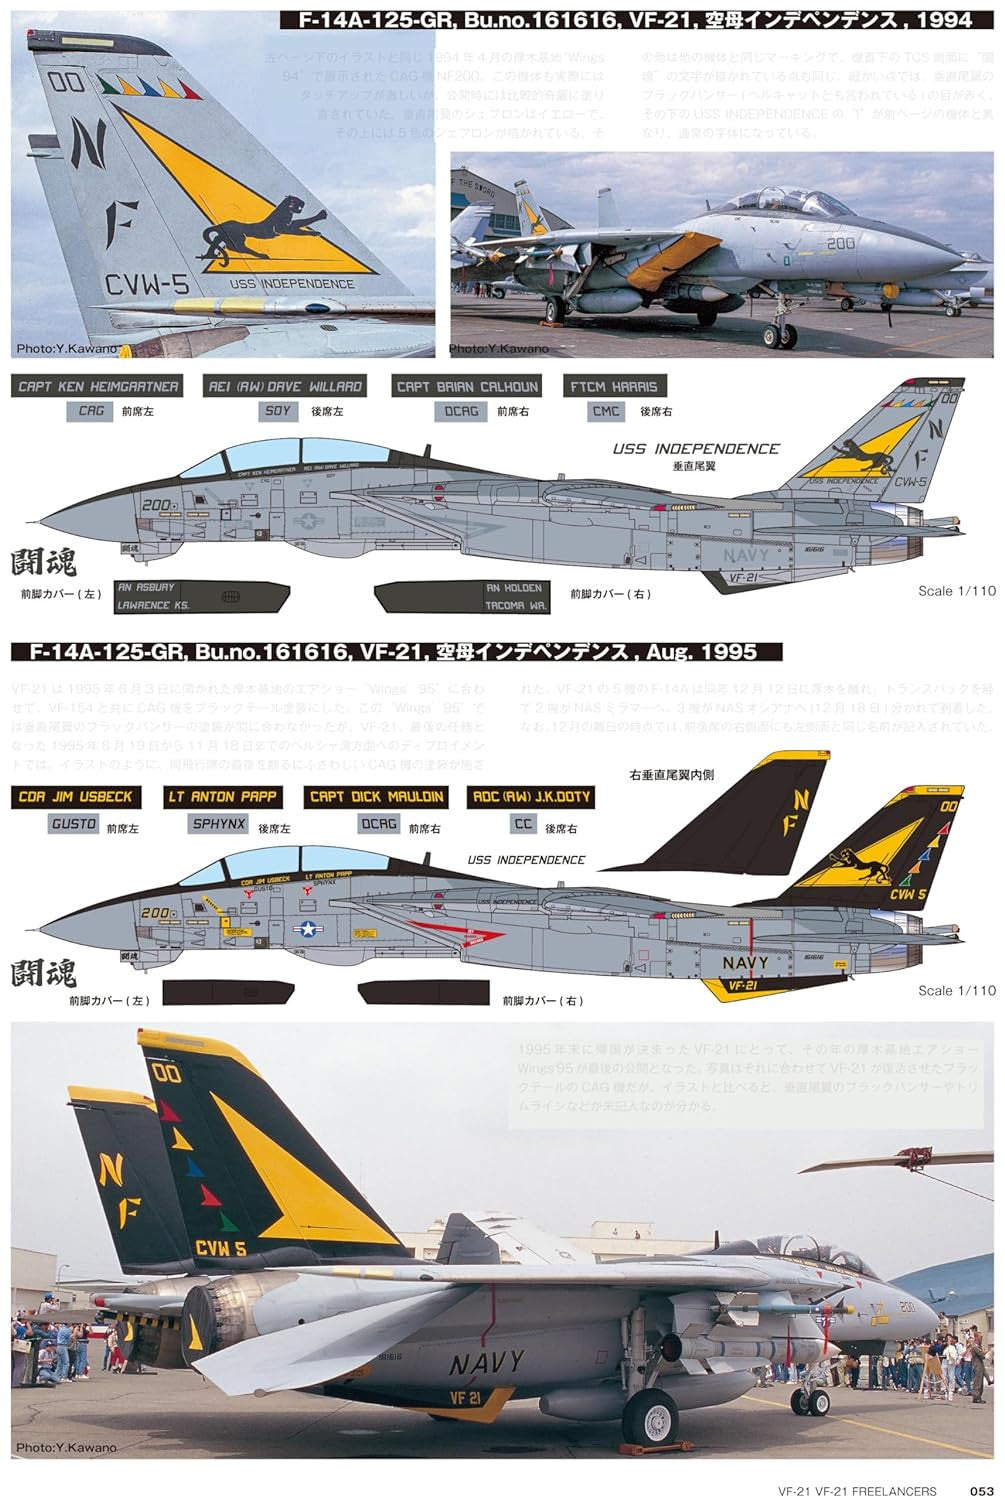 ModelArt Tomcat Squadron 1: F14 Tomcat Squadron history guide (Japanese)